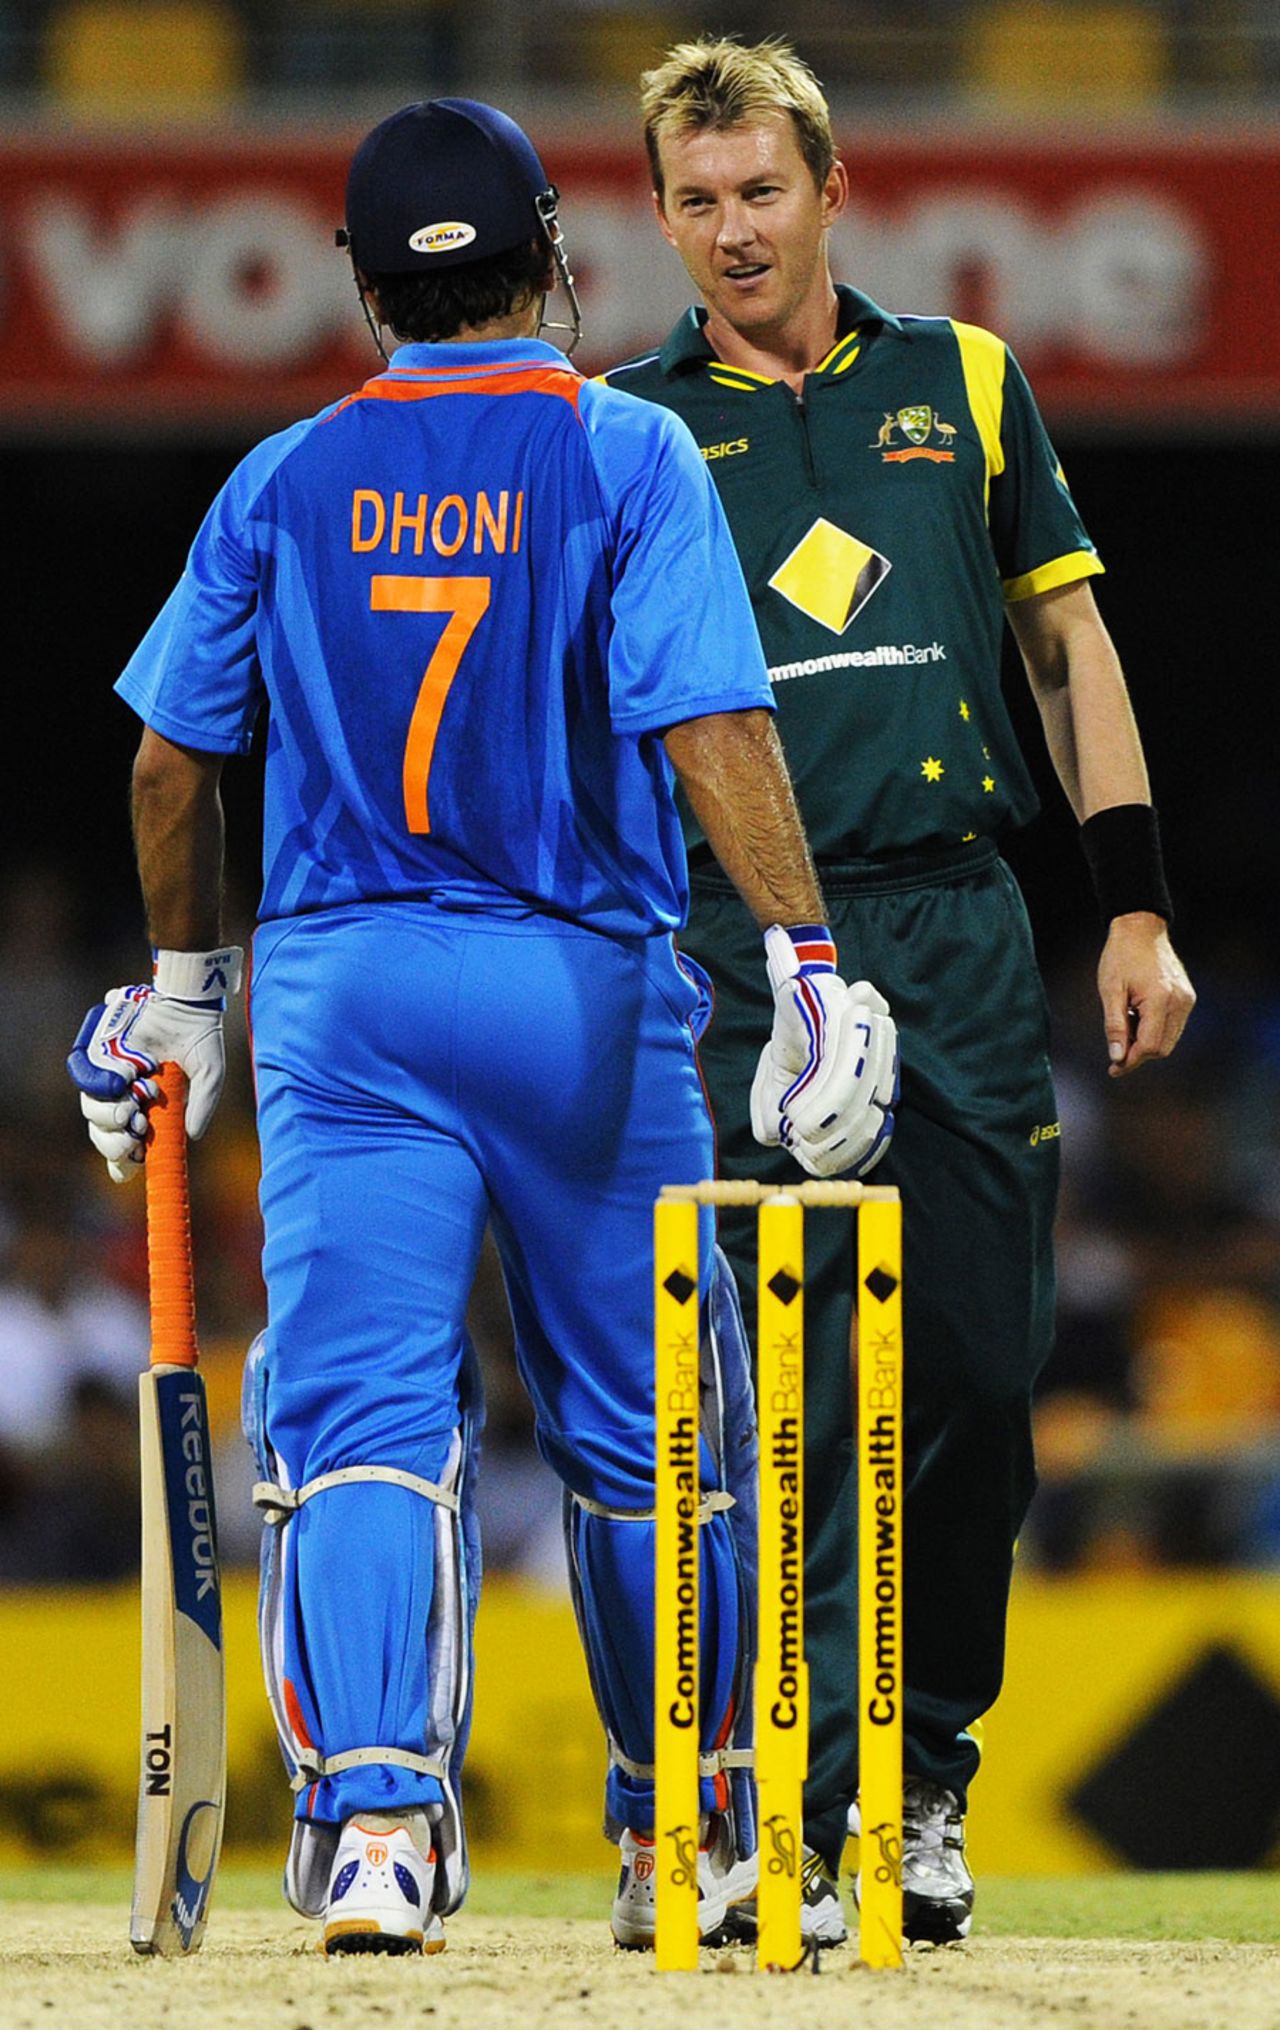 There was plenty of banter between Brett Lee and MS Dhoni, Australia v India, CB Series, Brisbane, February 19, 2012